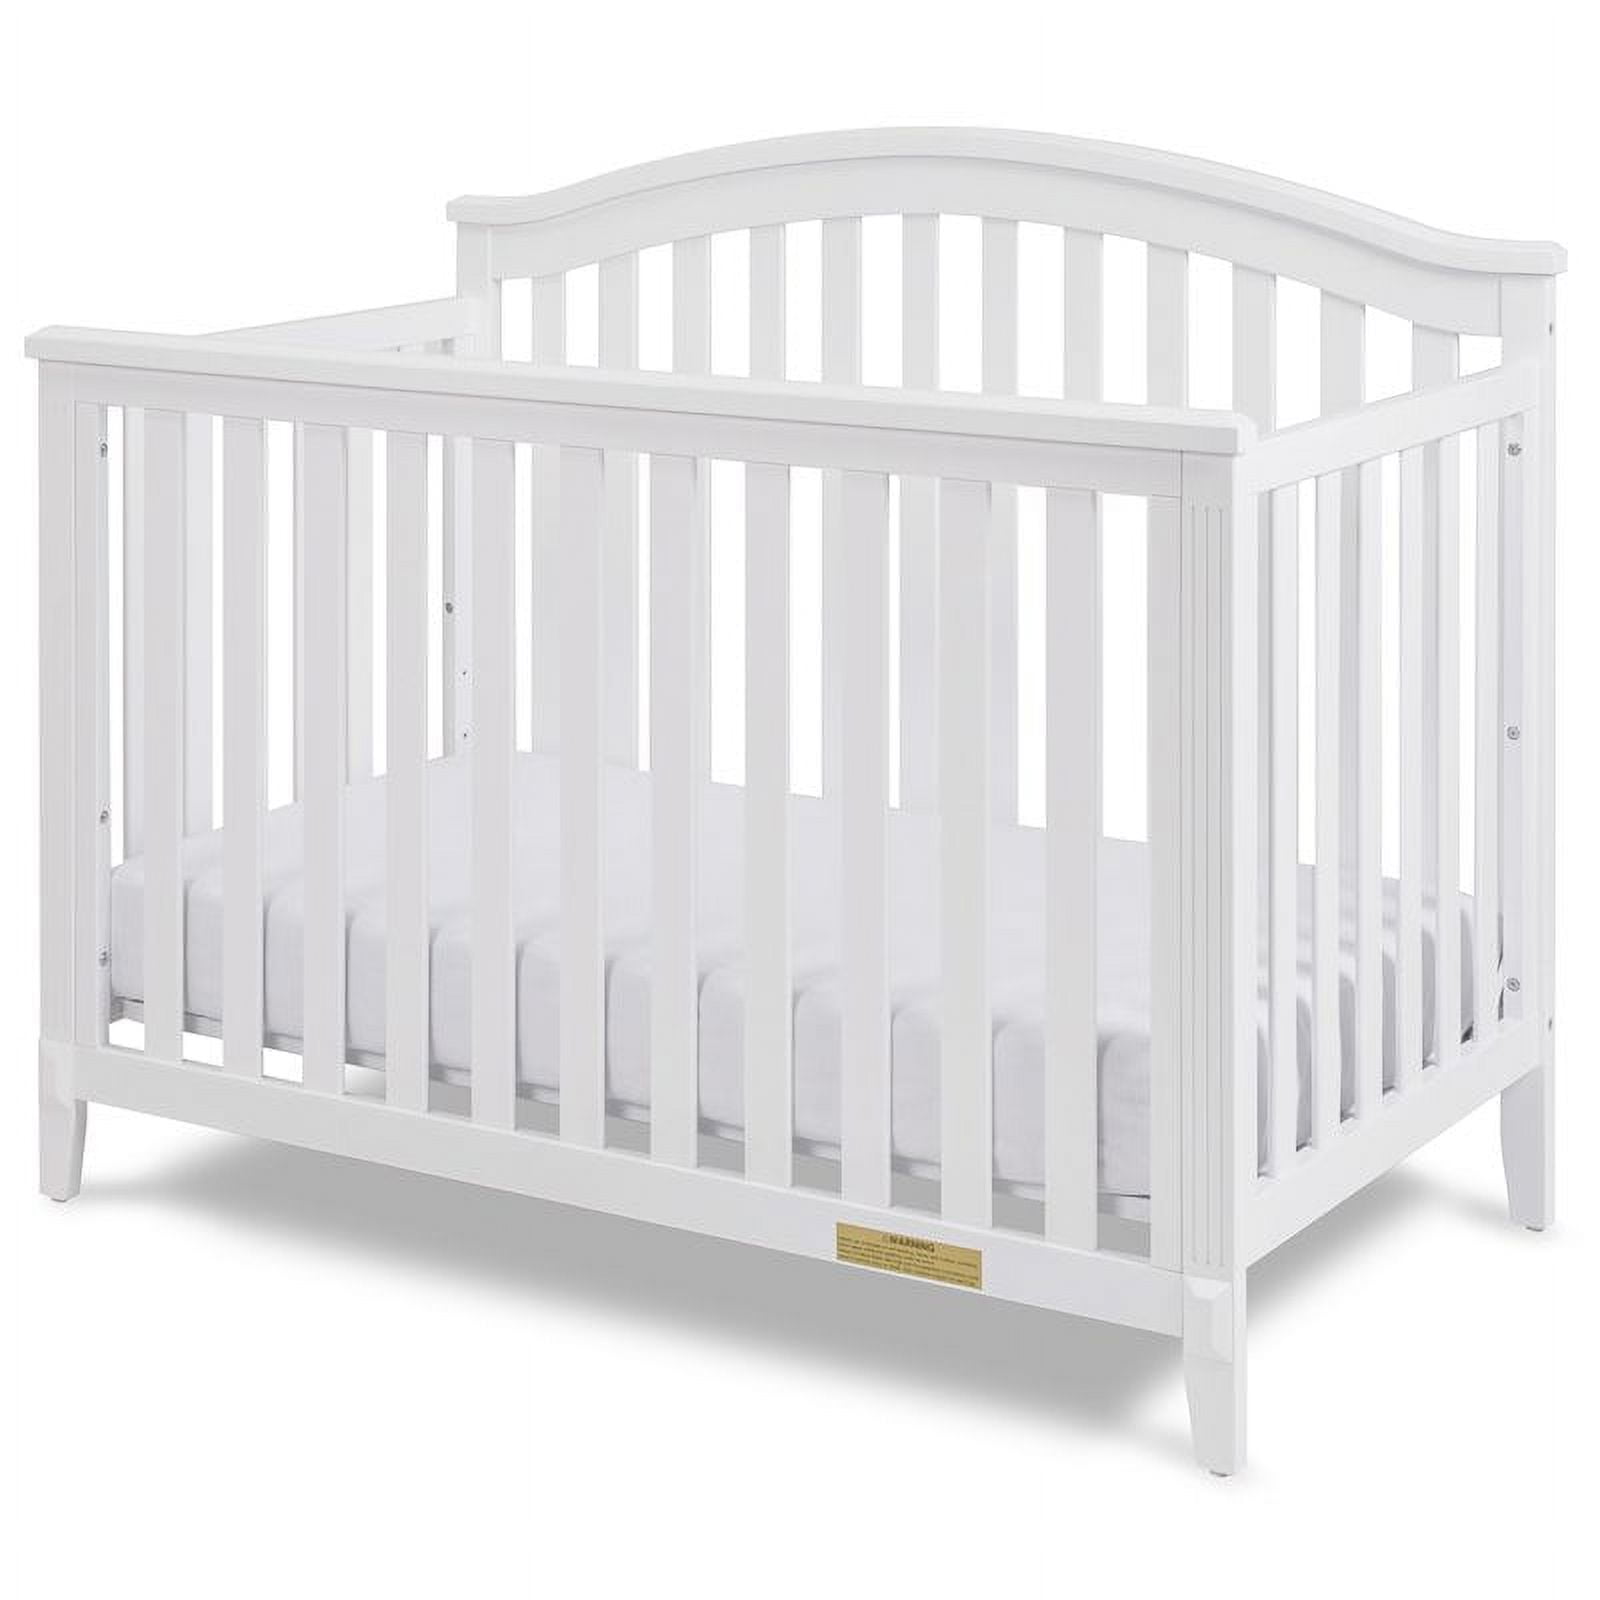 F457w 4-in-1 Baby Crib Furniture Kali Ii - White